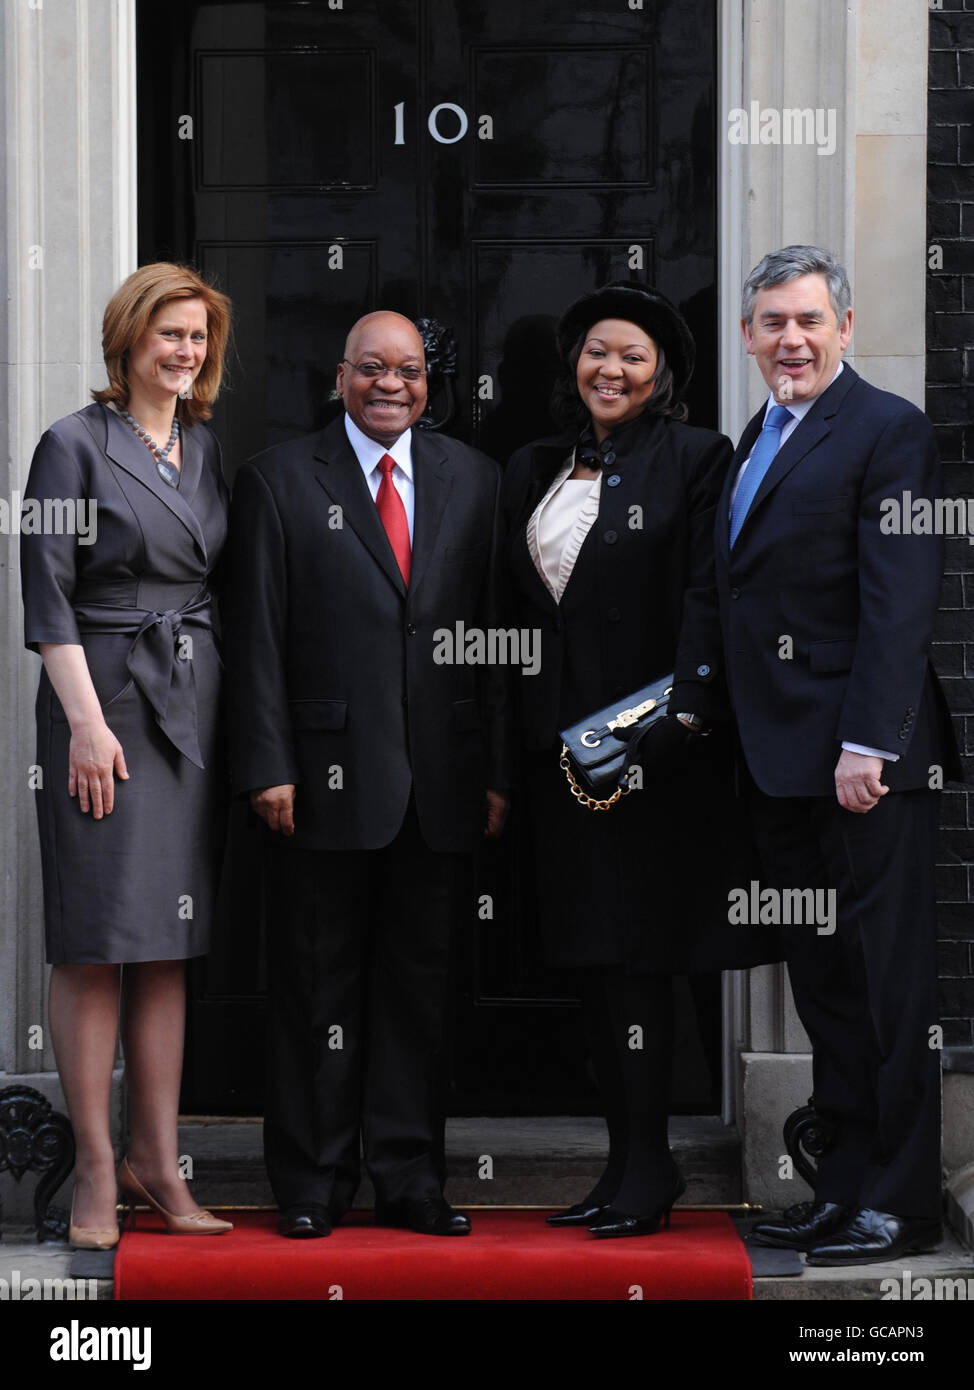 Il primo ministro Gordon Brown e sua moglie Sarah accolgono il presidente sudafricano Jacob Zuma e sua moglie Tobeka Madiba al 10 Downing St a Londra. Foto Stock